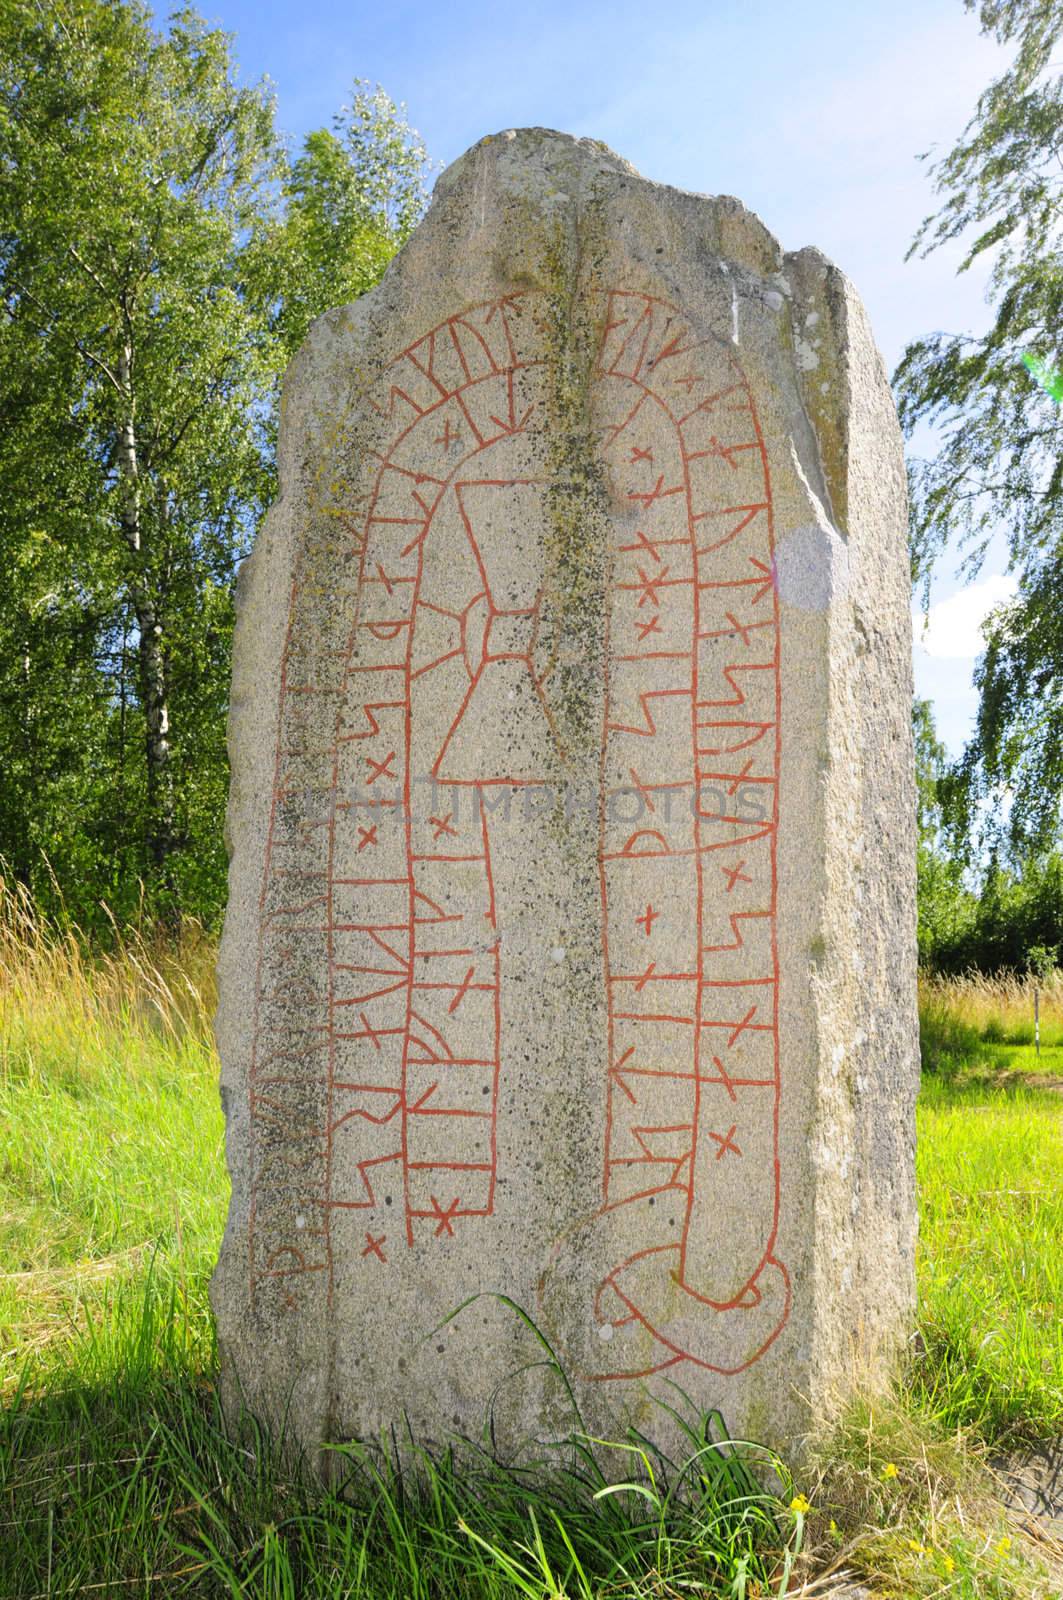 Ancient rune stone in Sweden